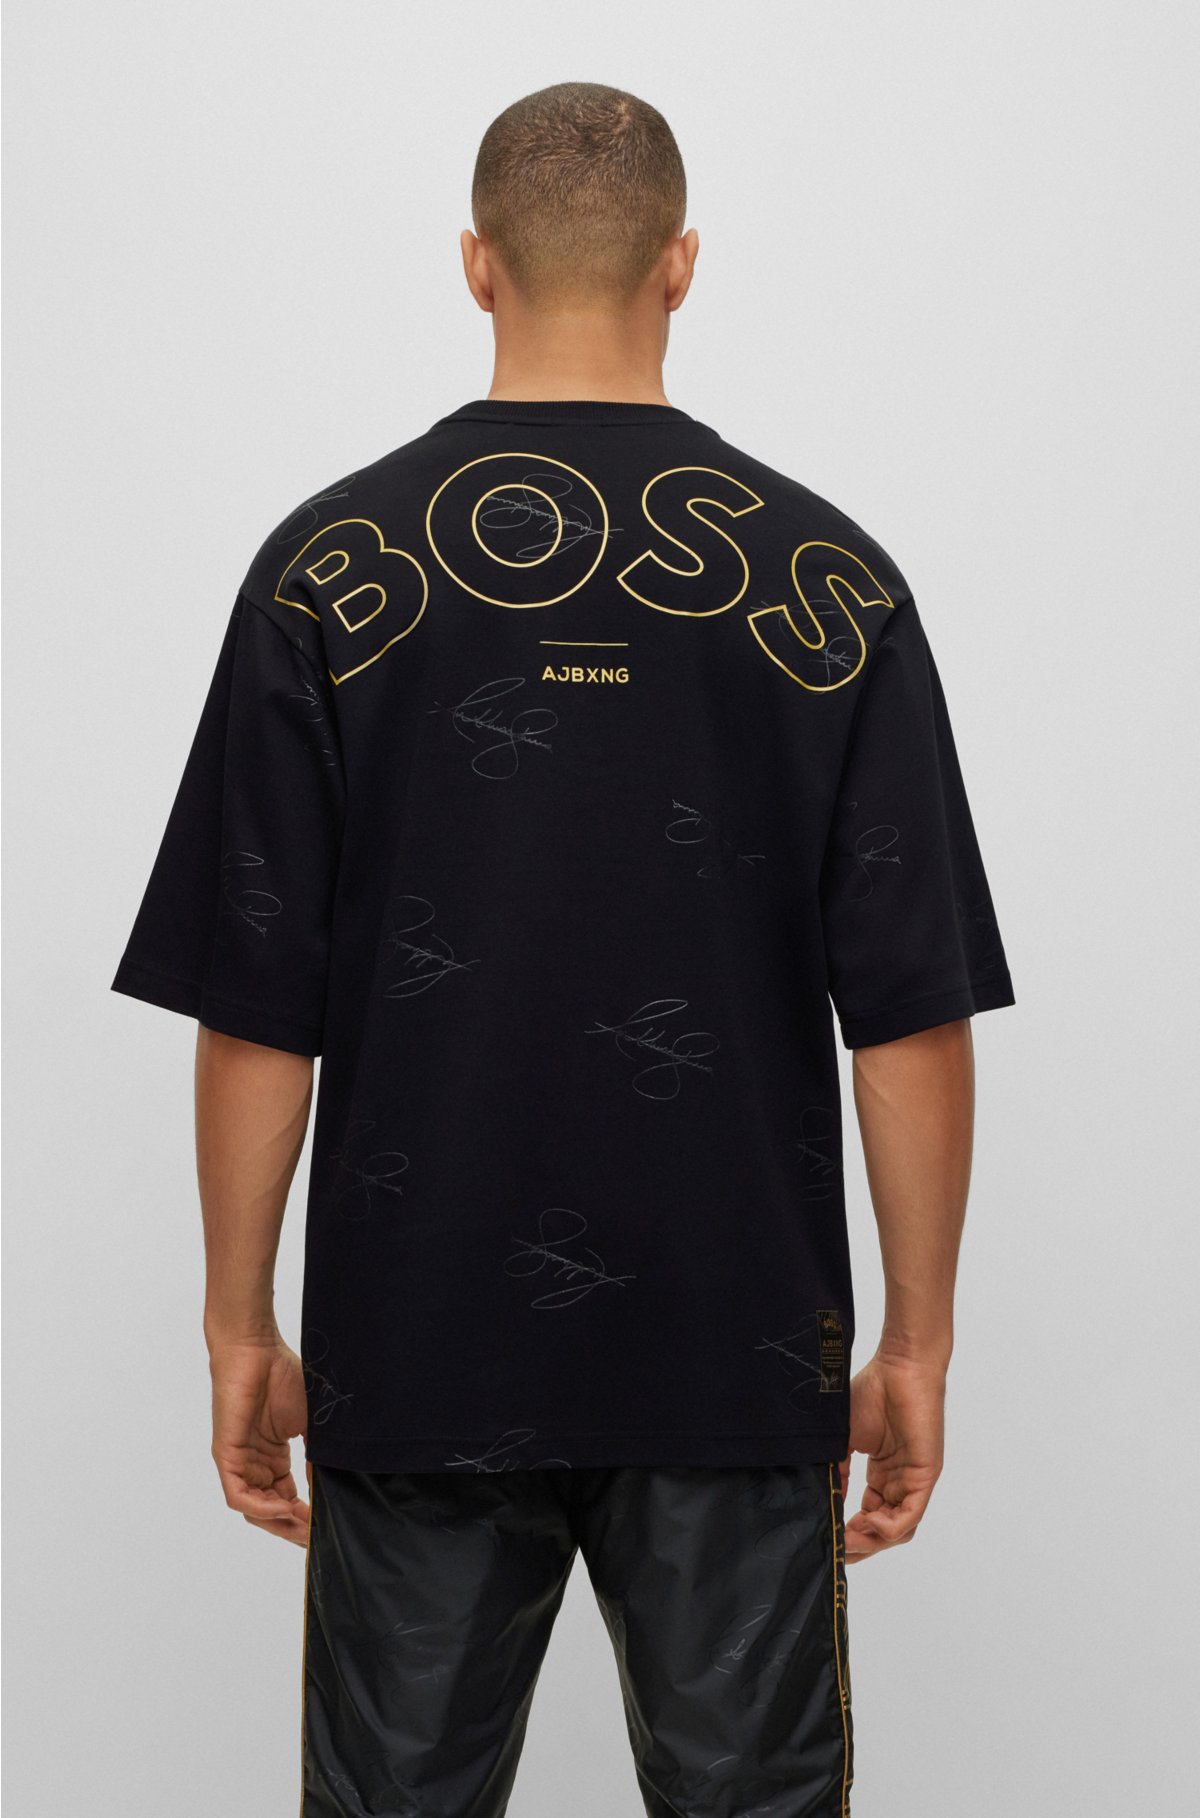 BOSS BOSS - signatures T-shirt with interlock-cotton AJBXNG and collaborative branding x